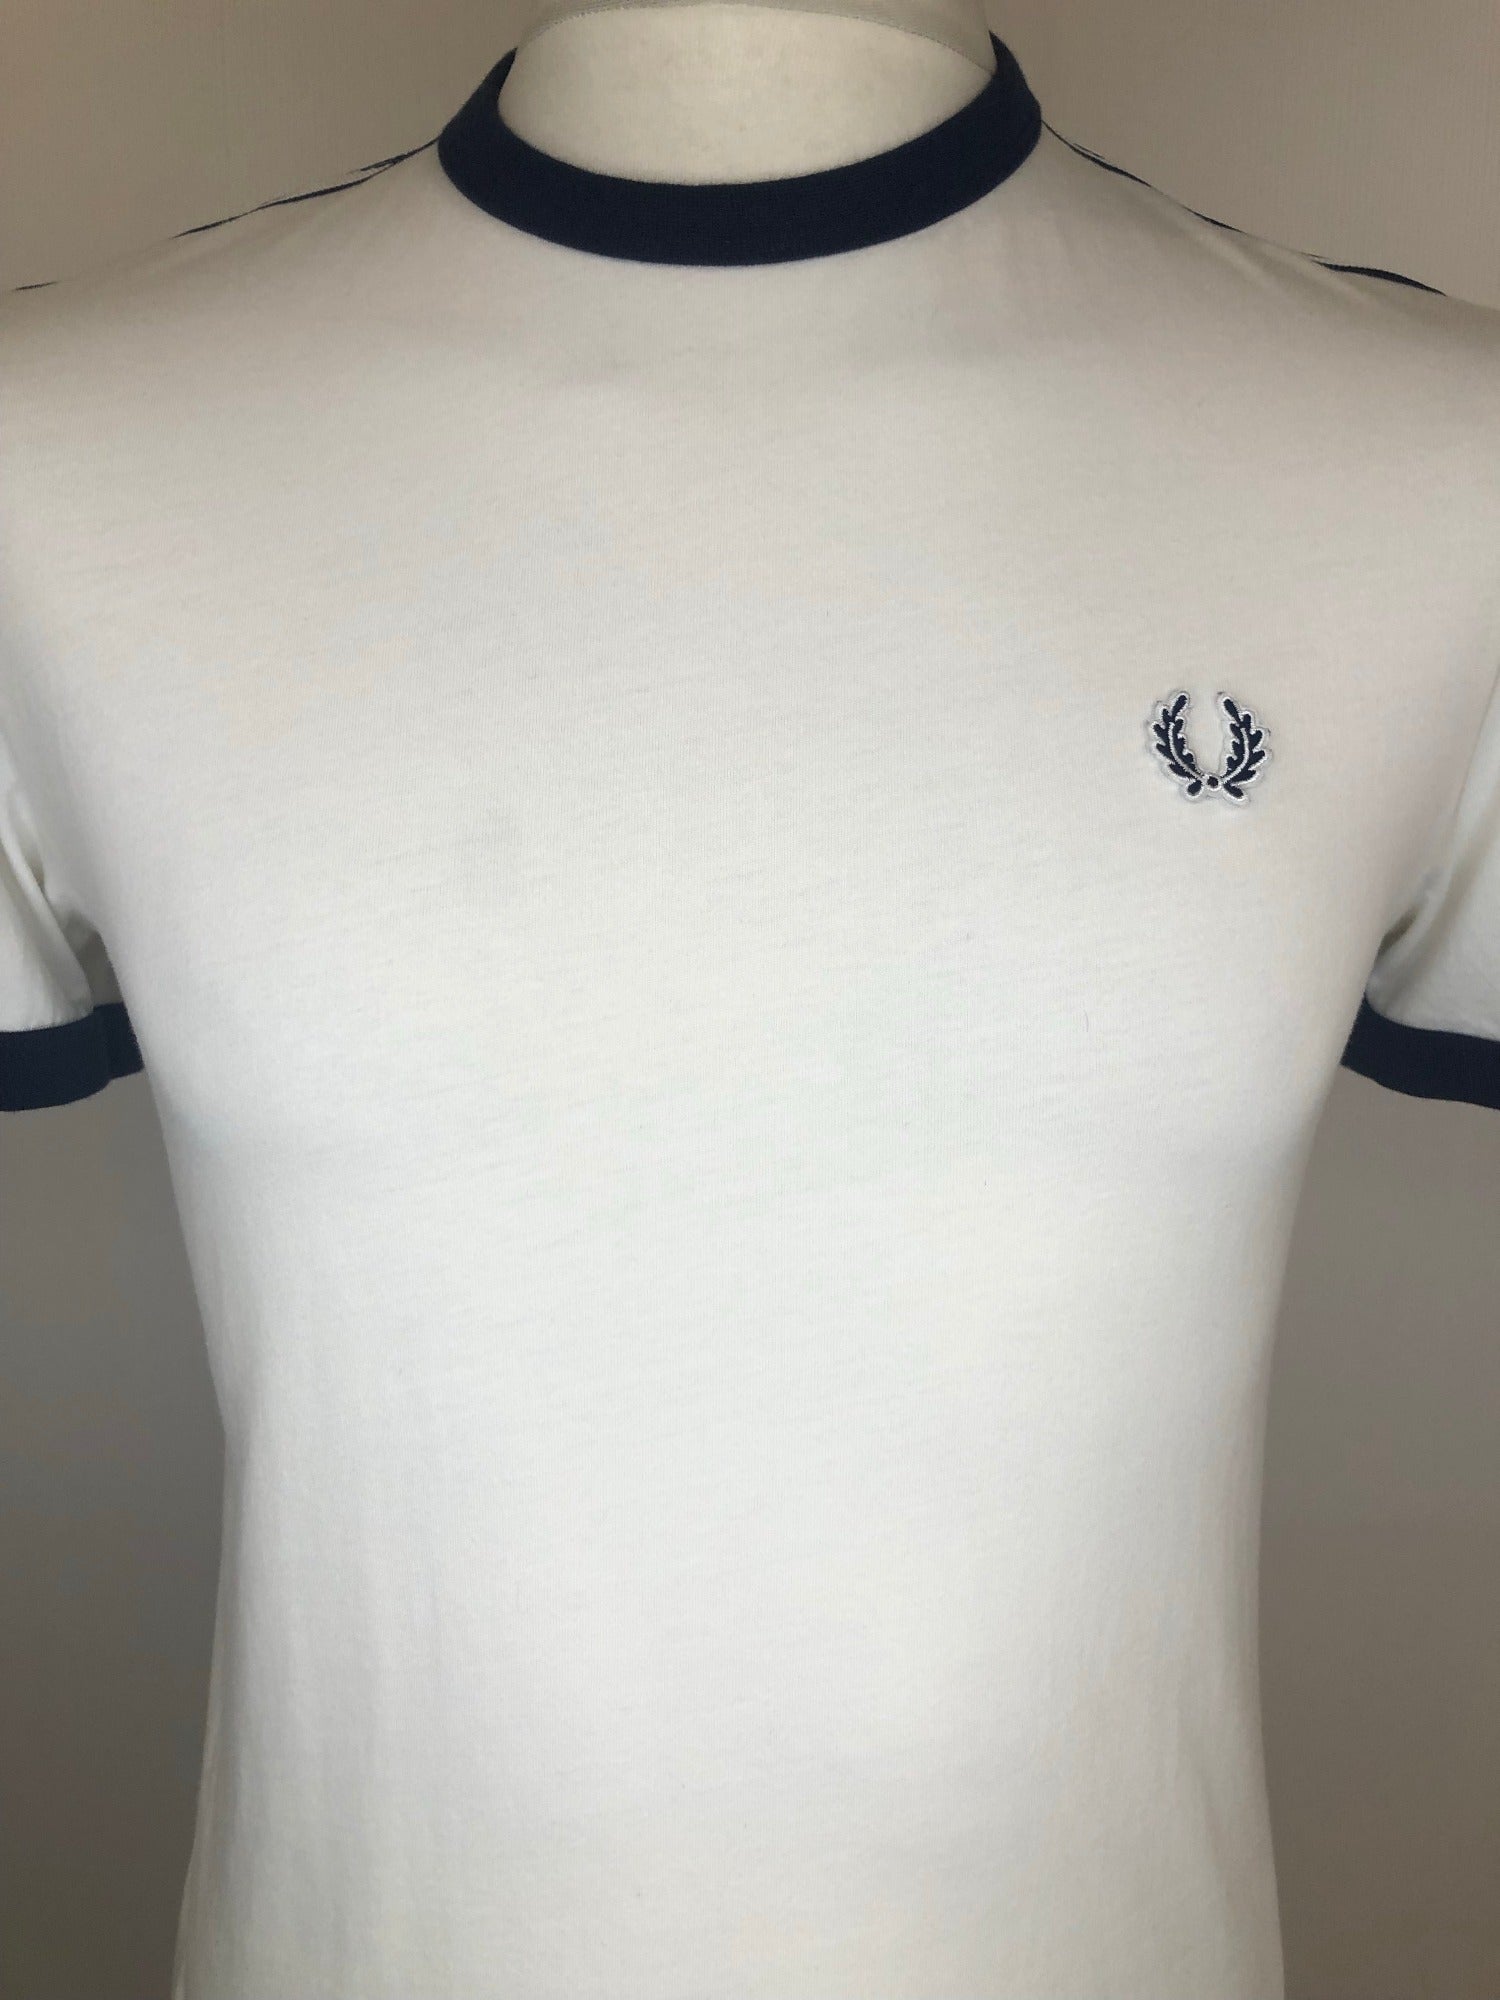 white  Top  T-Shirt  Stripes  sportswear  S  MOD  mens  Logo design  Fred Perry